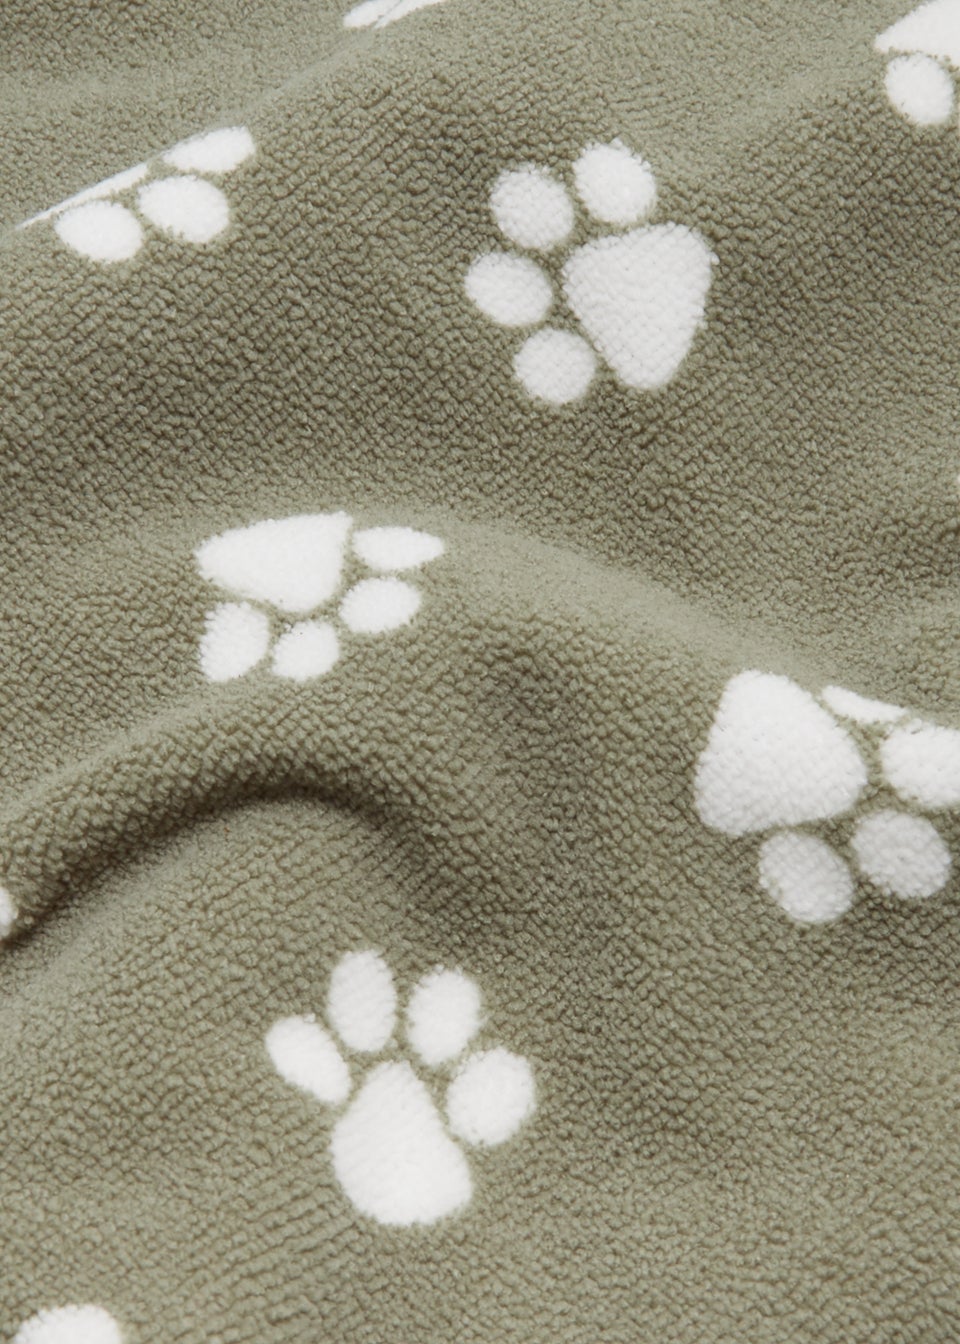 Green Paw Print Pet Towel (120cm x 80cm)